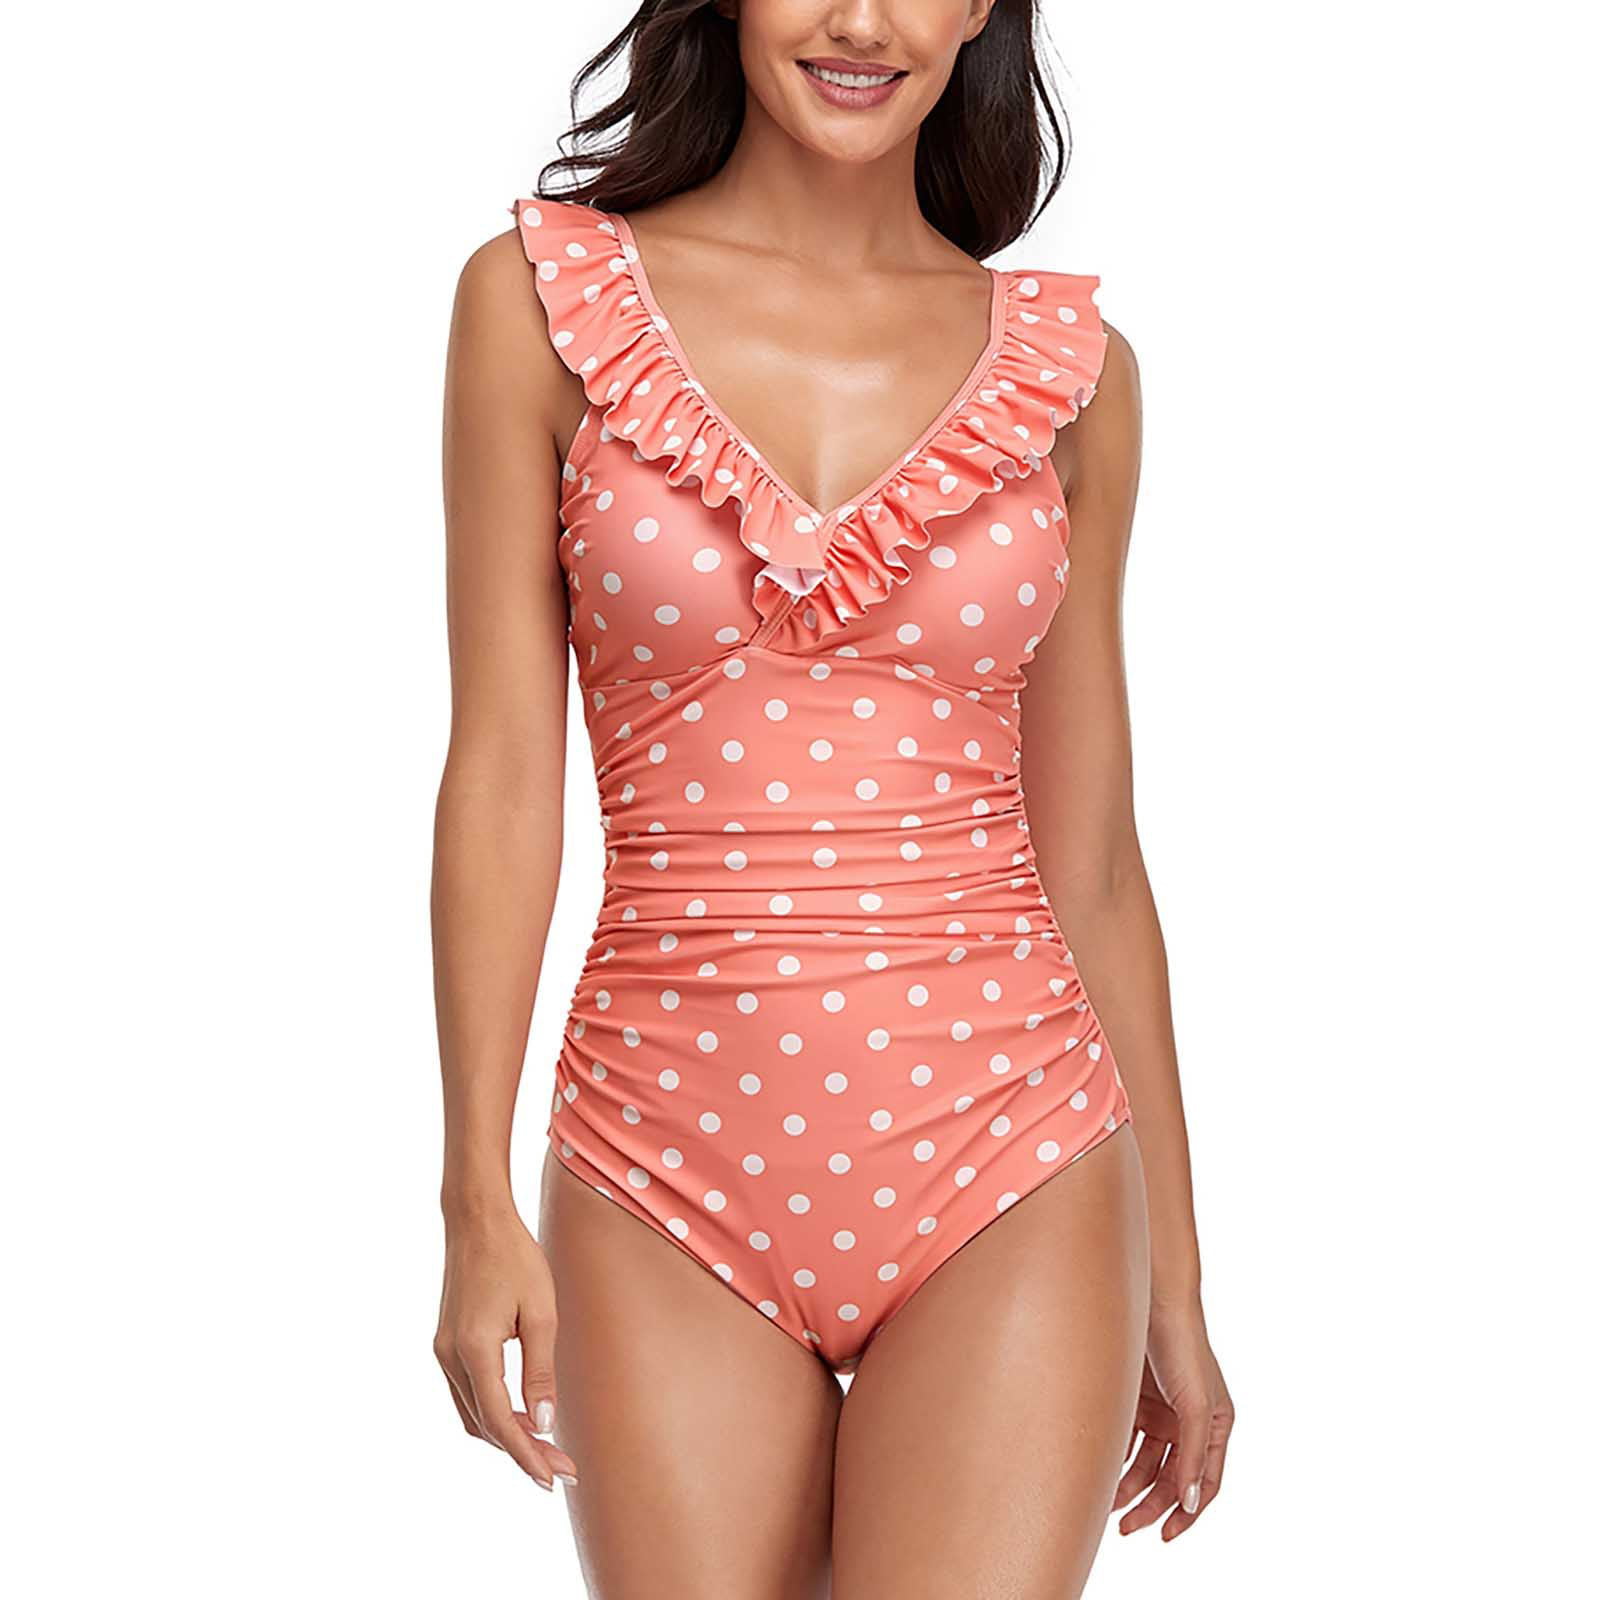 Women Plus Size Polka Dot Tankini Set Swimsuit Padded Swimwear BeachWear UK14-20 